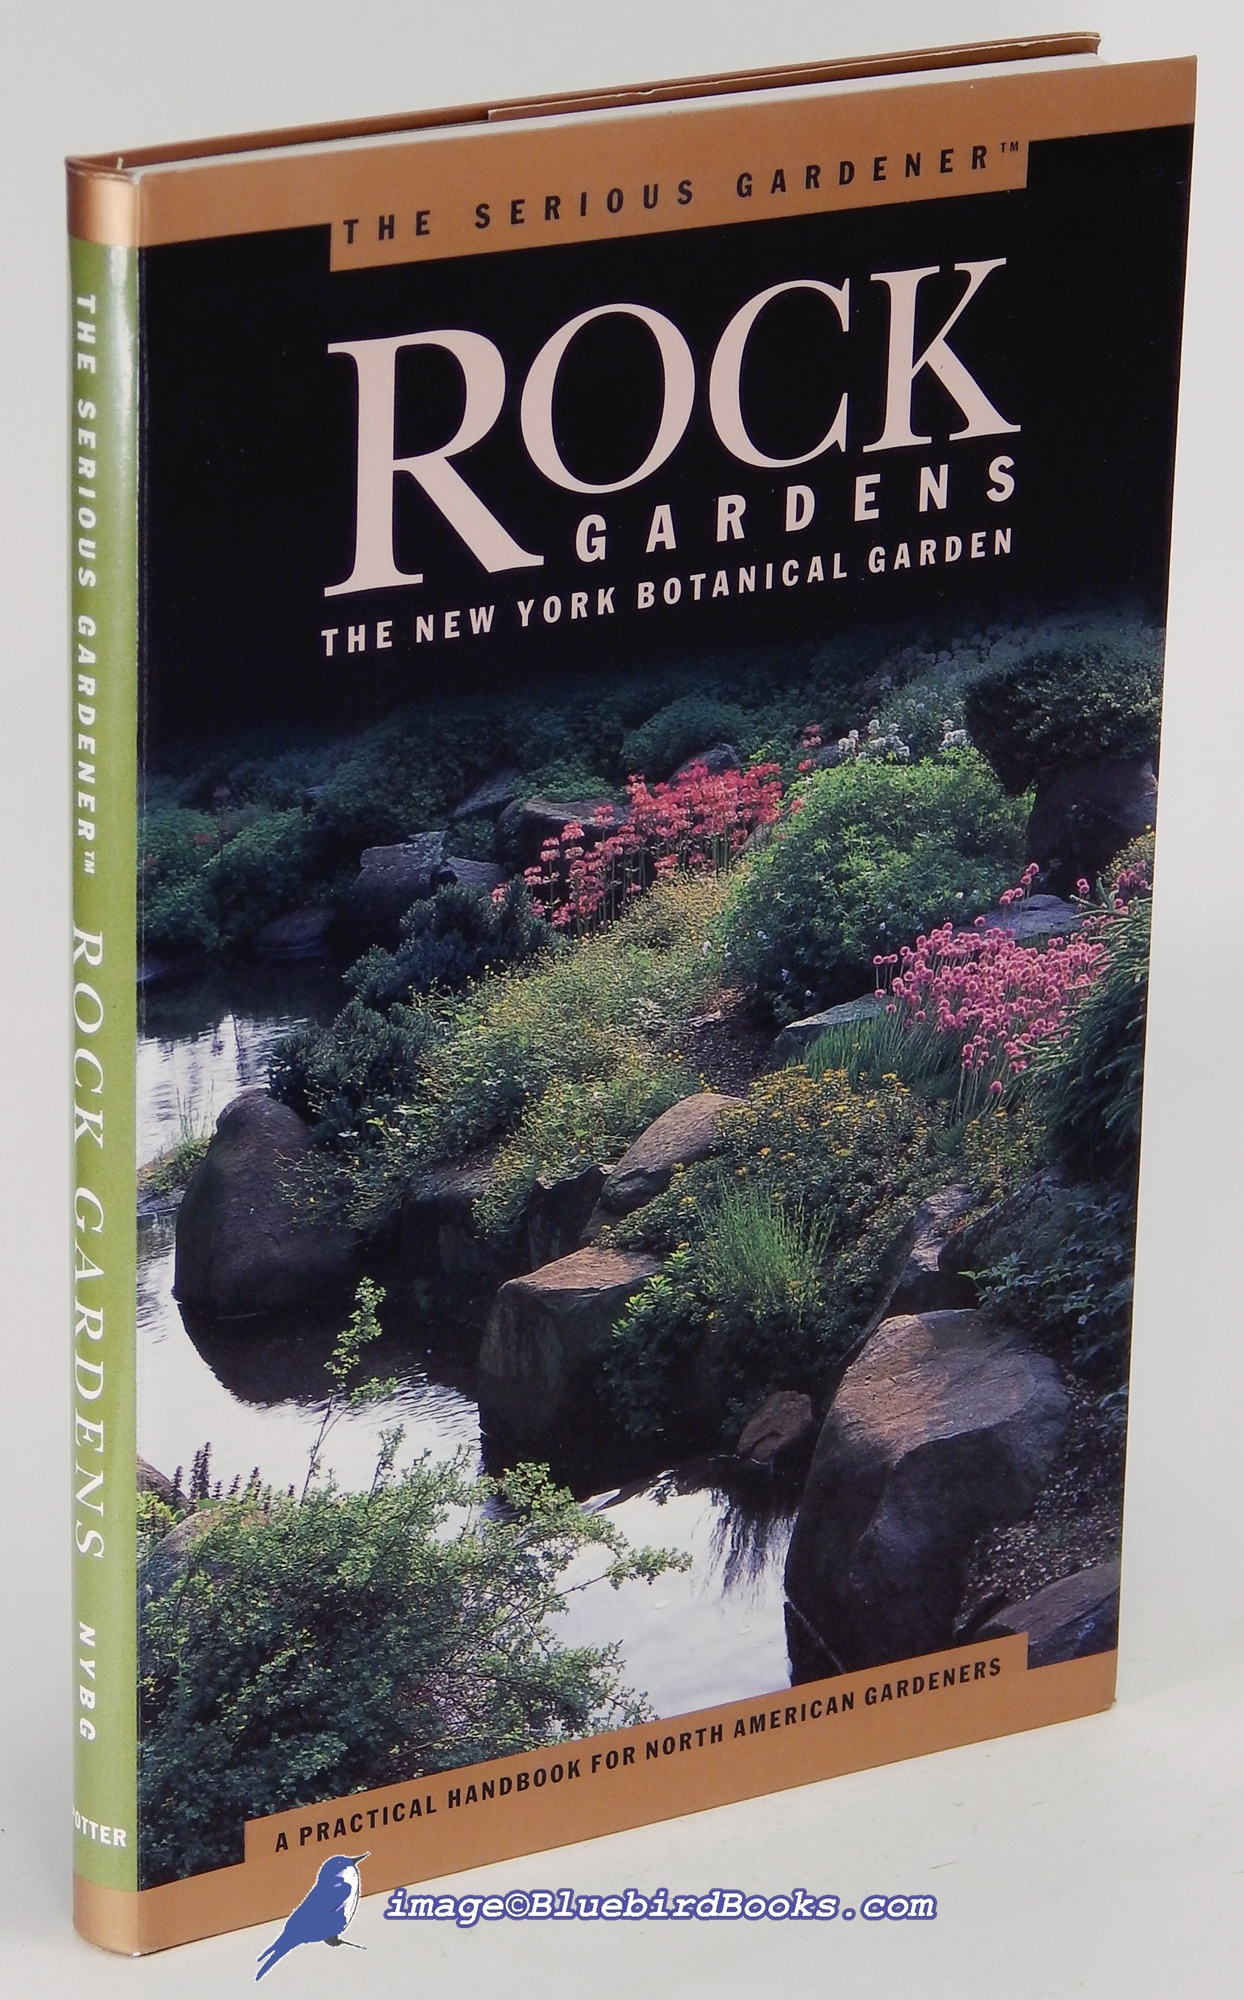 HALPIN, ANNE (TEXT); BARTOLOMEI, ROBERT (MASTER GARDENER) - The Serious Gardener: Rock Gardens (the New York Botanical Garden)